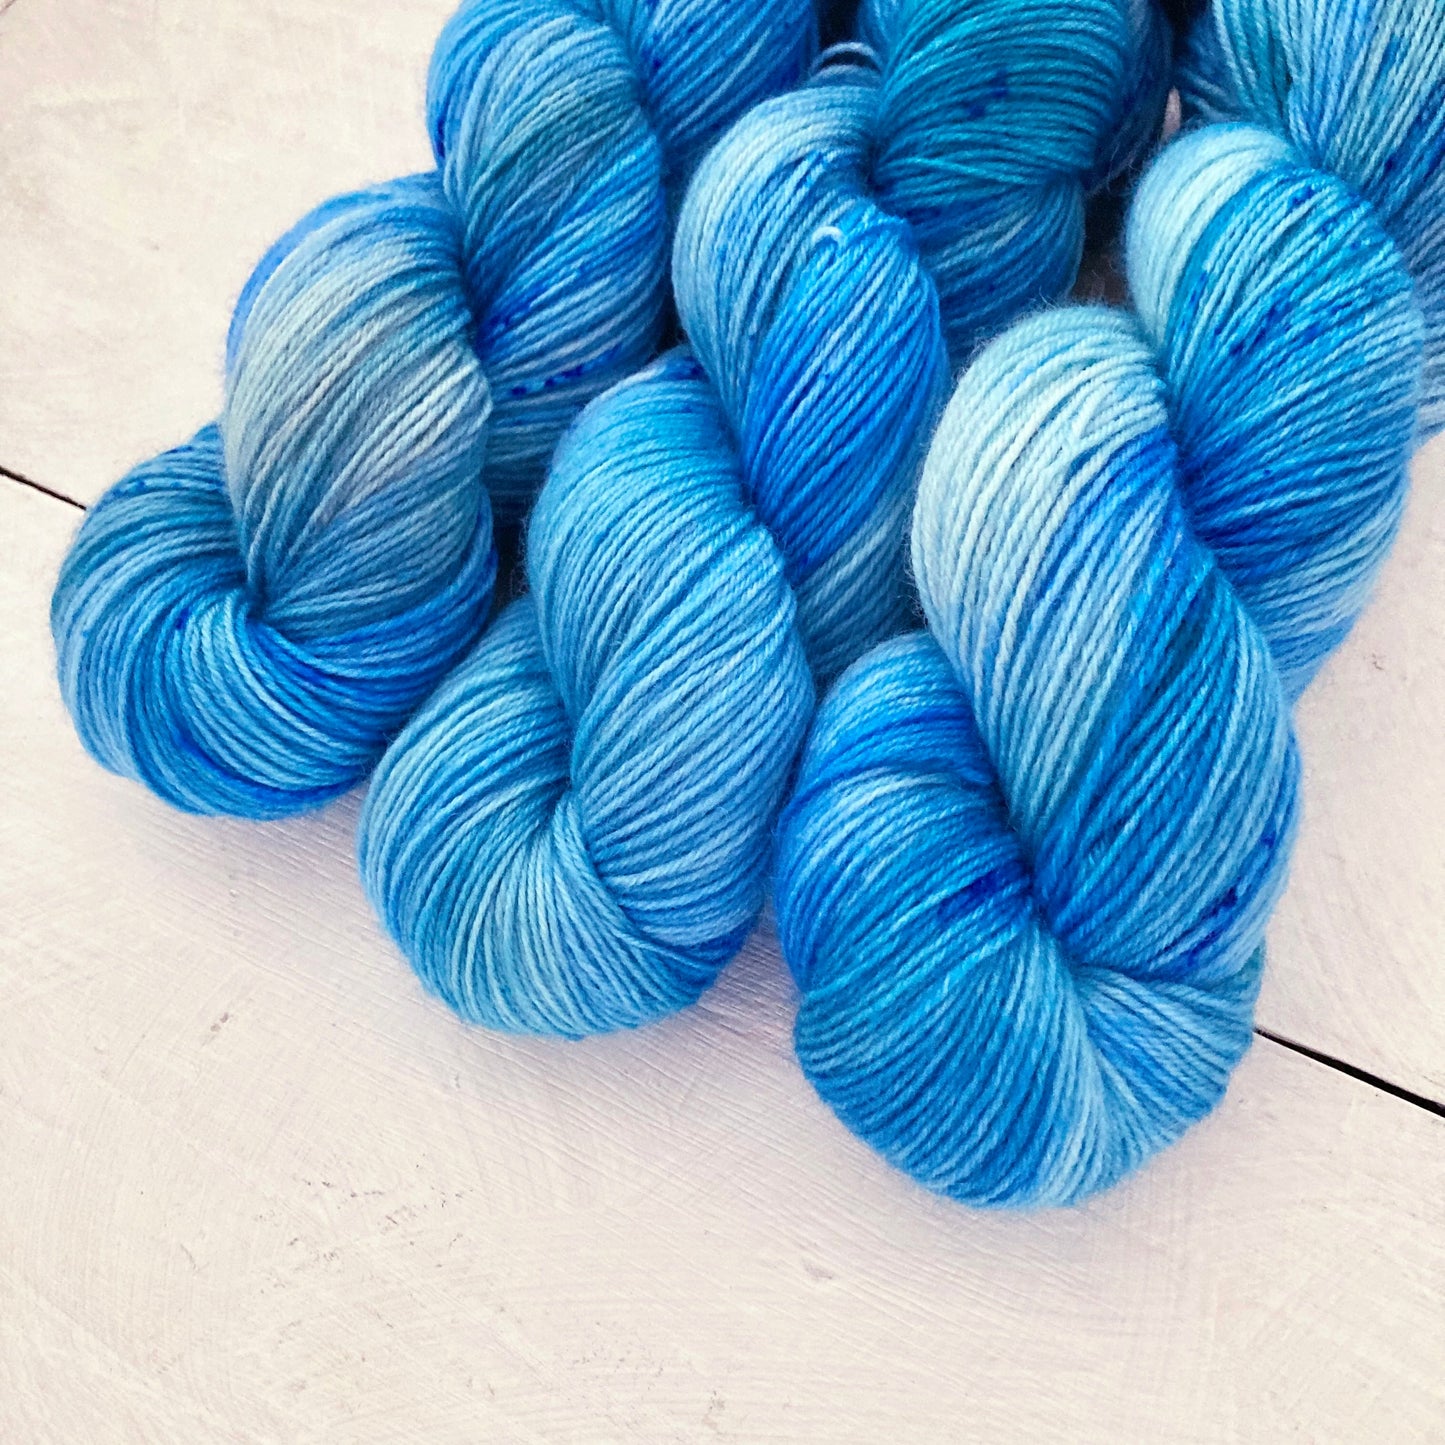 Hand-dyed yarn No.225 sock yarn "Neptune, The Mystic"